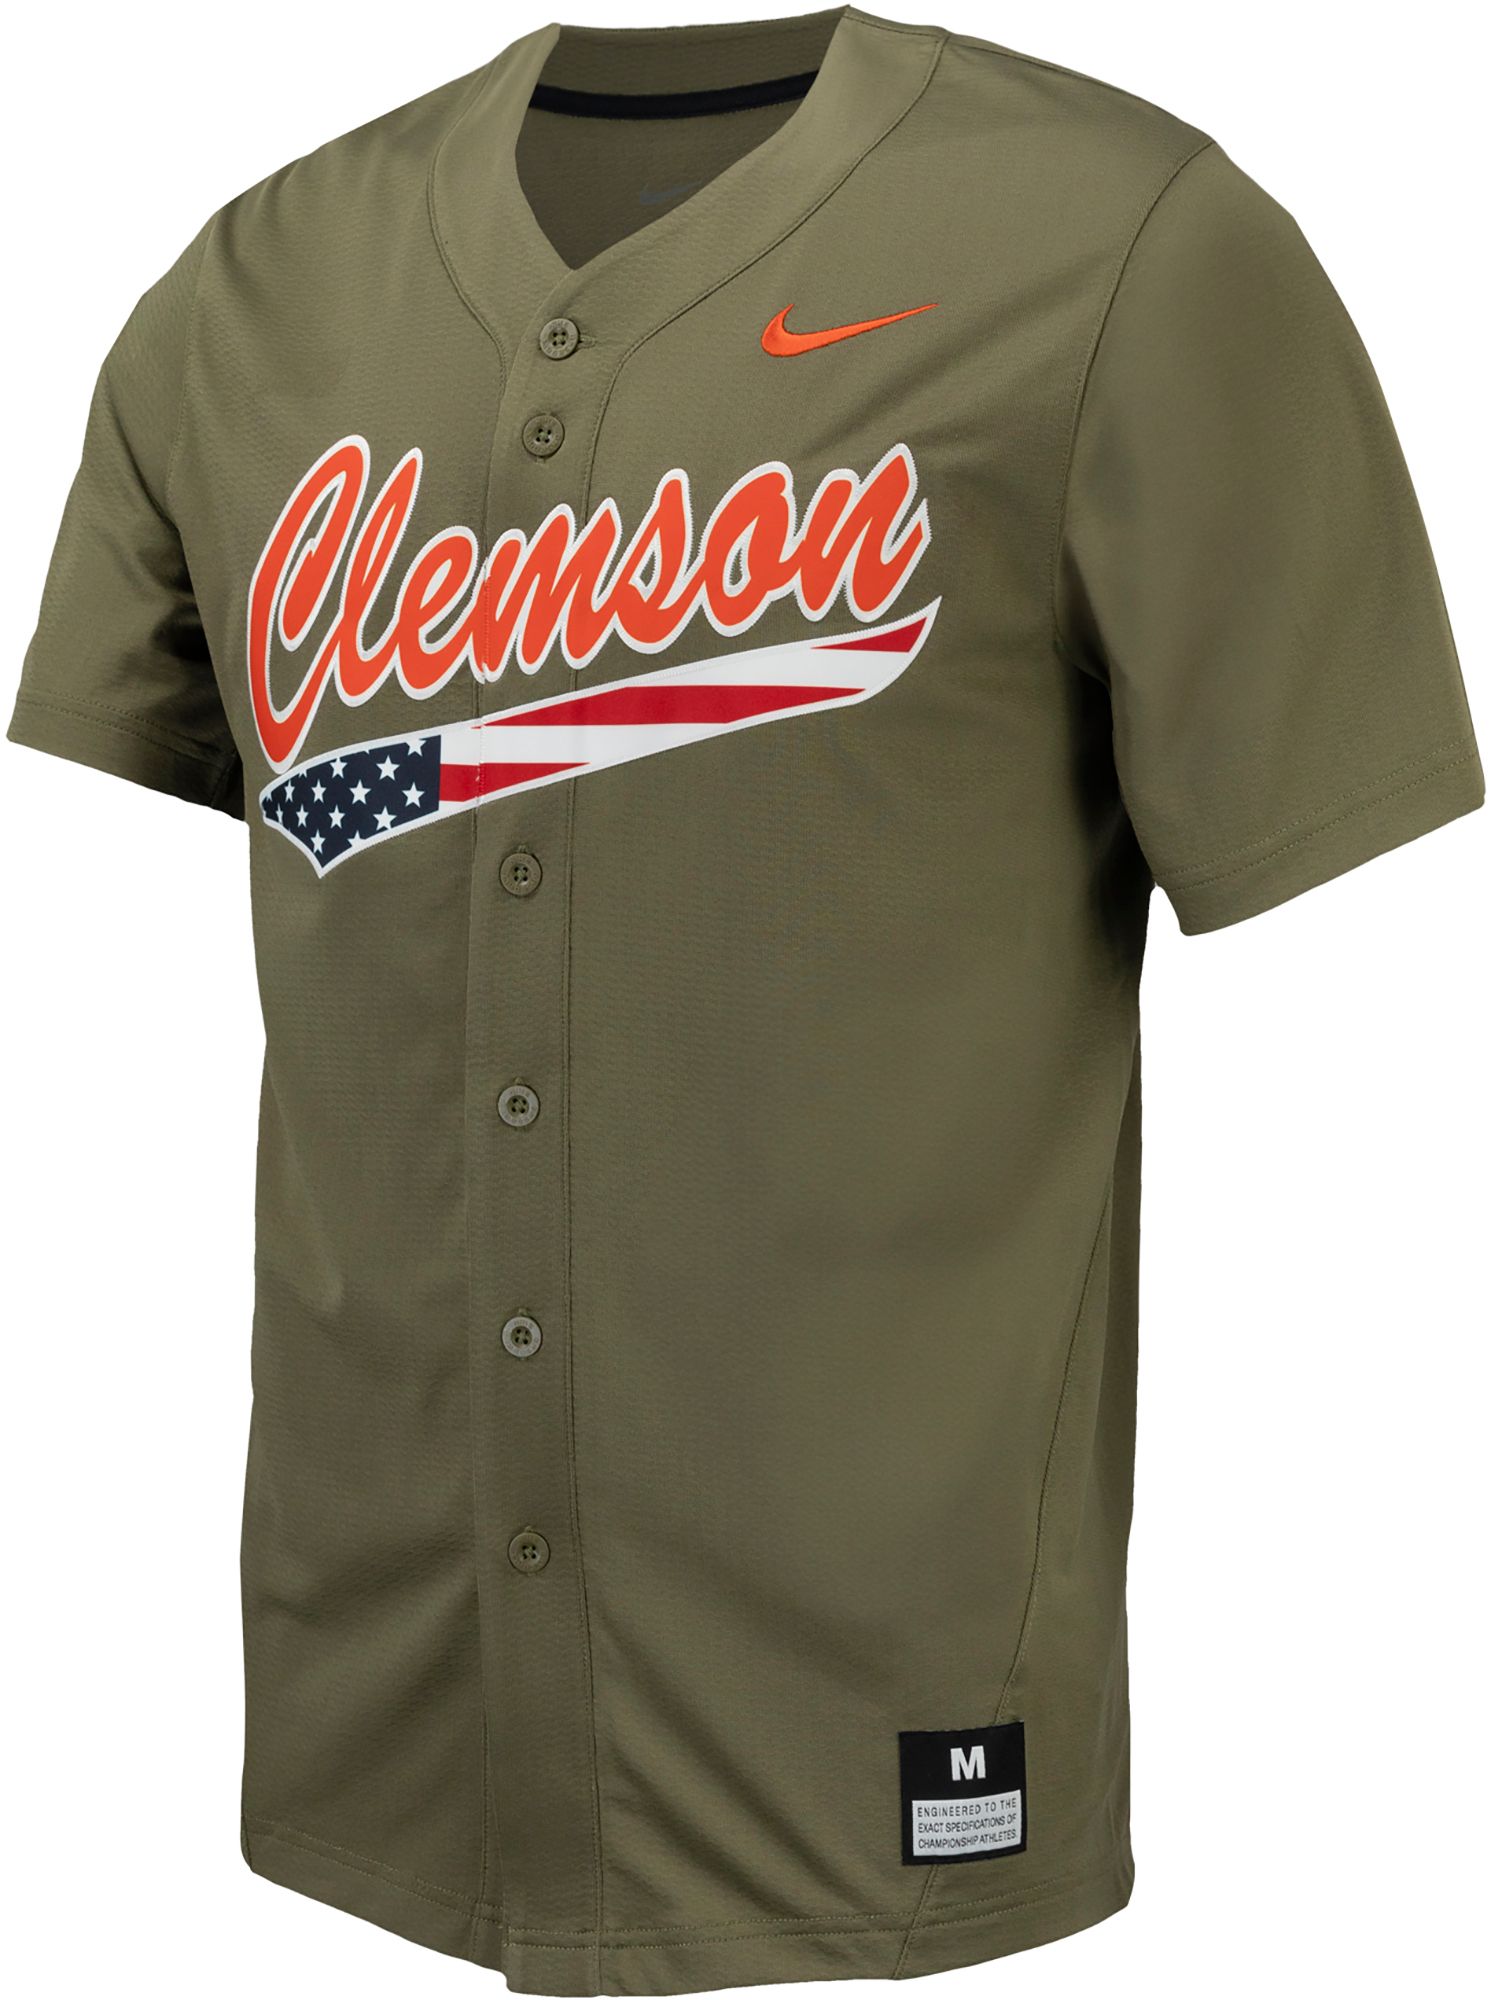 Nike Men's Clemson Tigers Full Button Replica Baseball Jersey